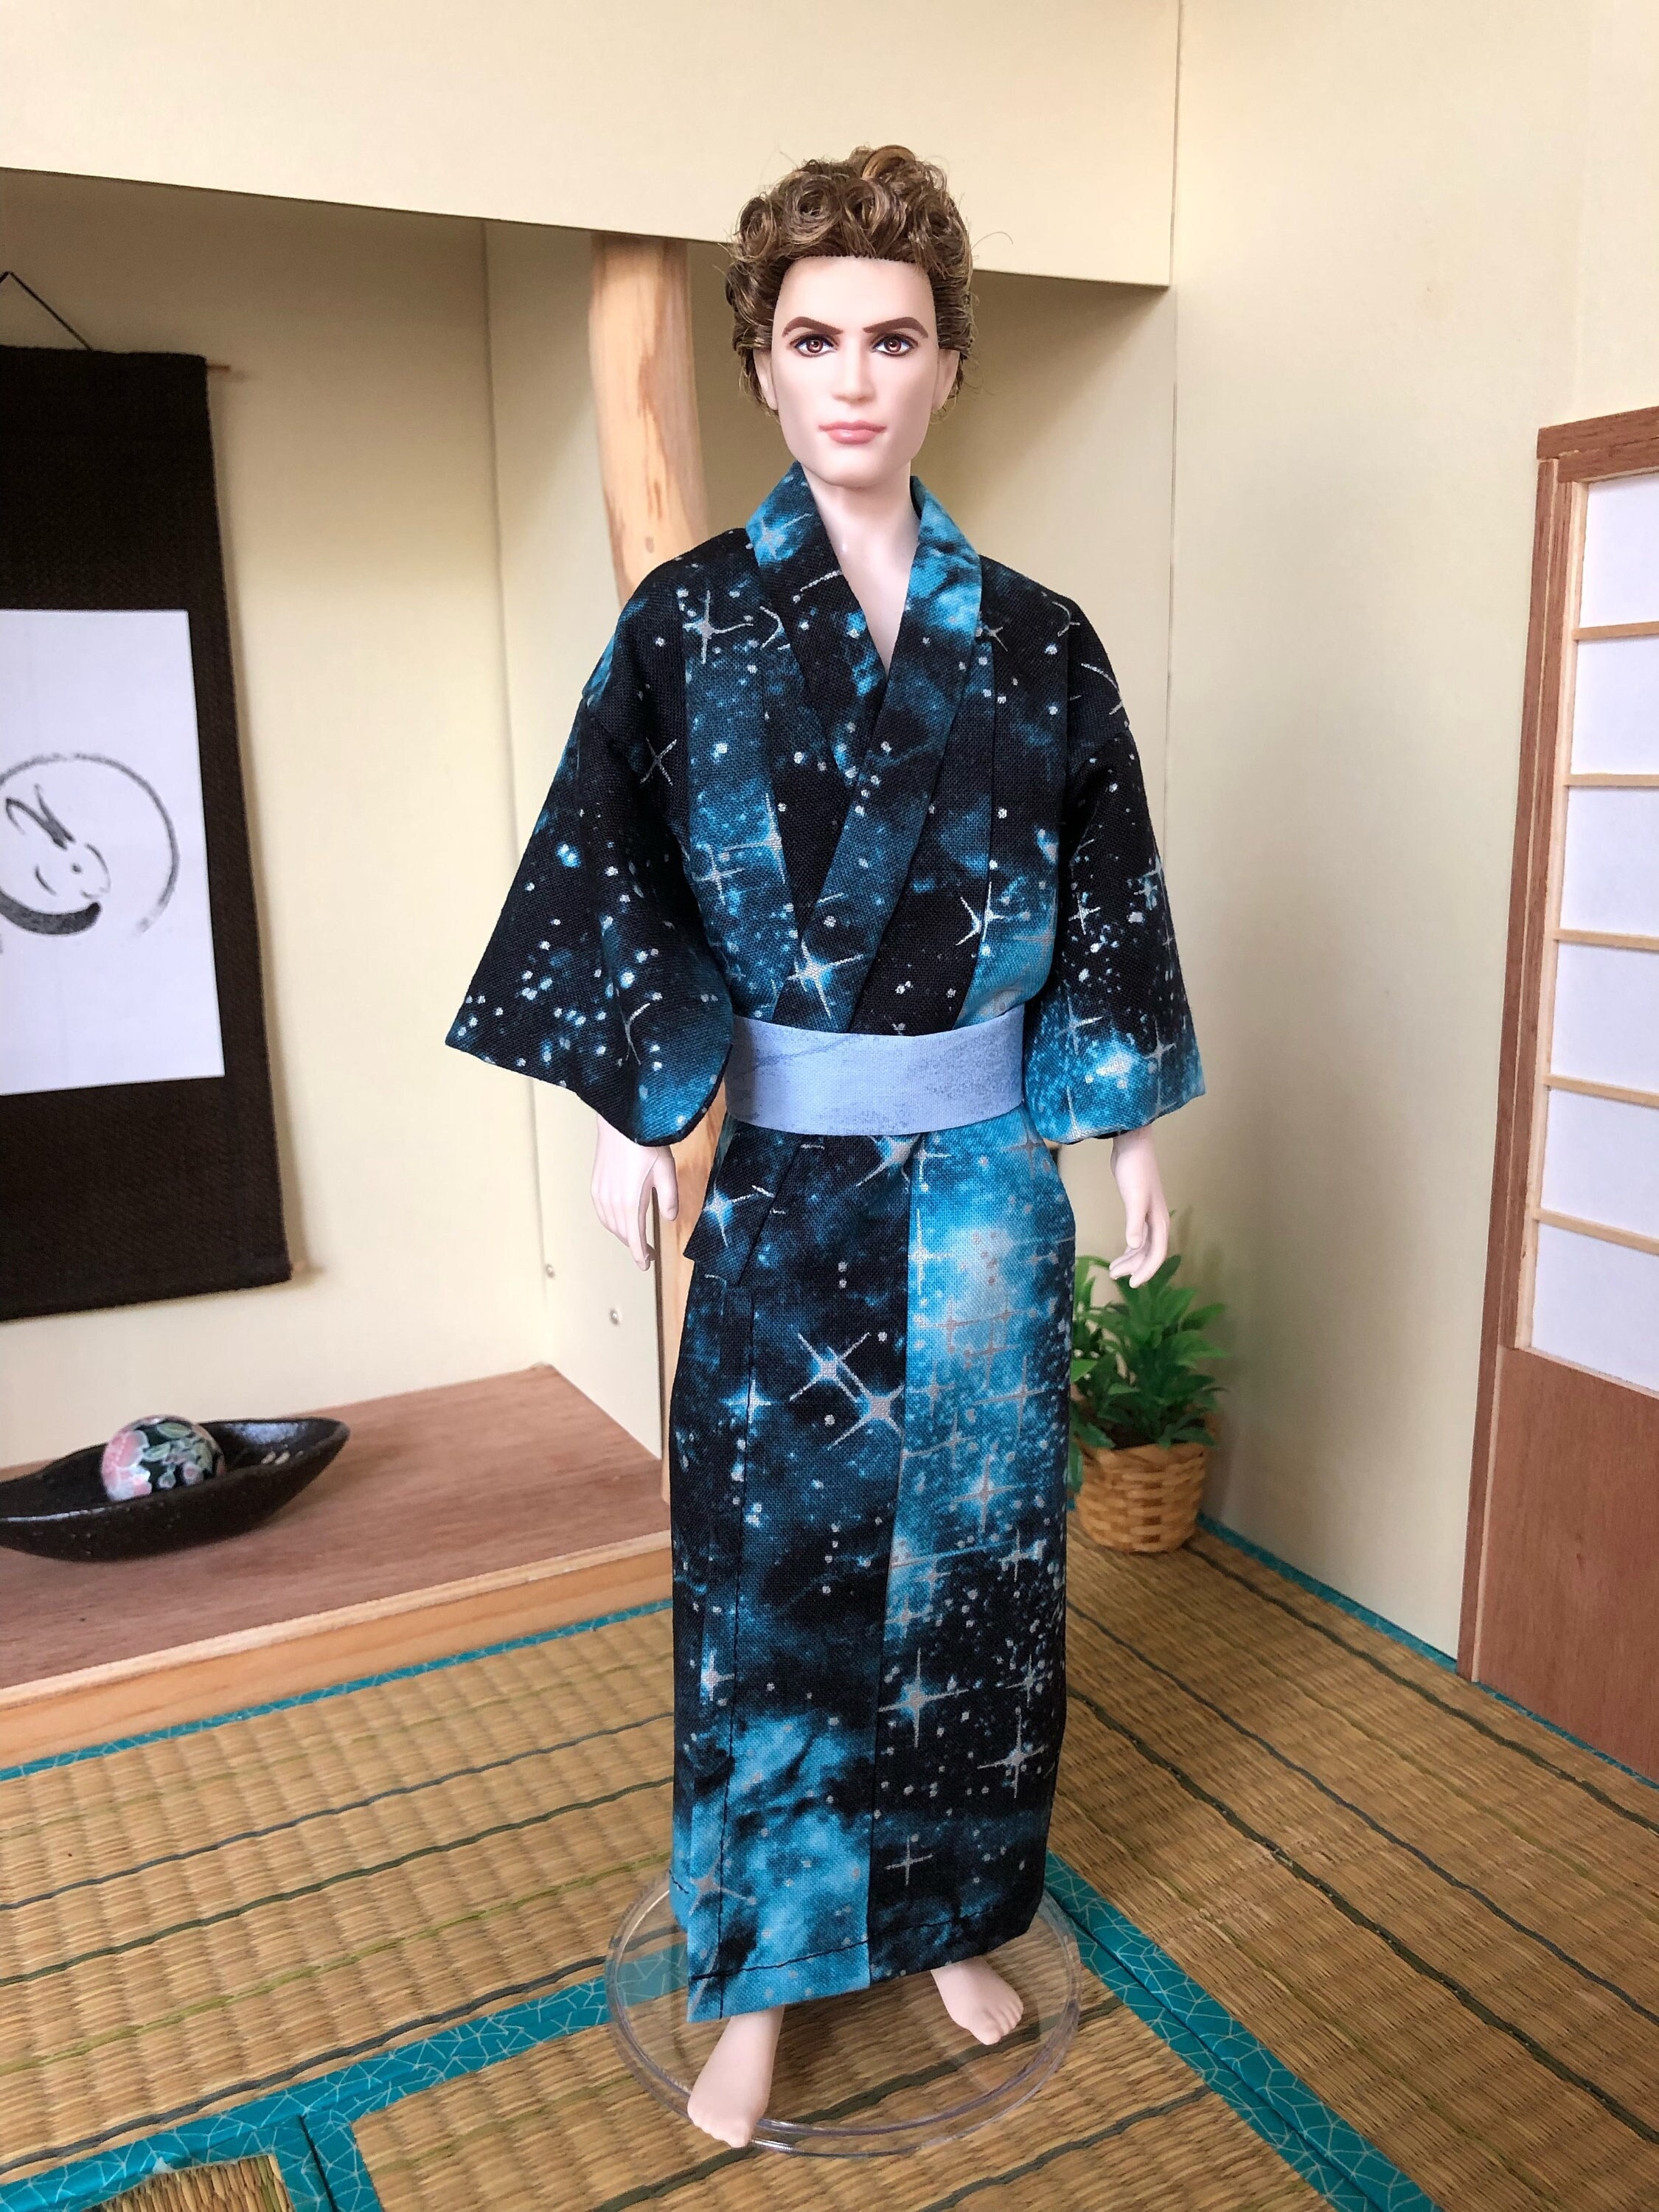 Japanese cartoon anime girl in a kimono dress  Stock Illustration  102008292  PIXTA